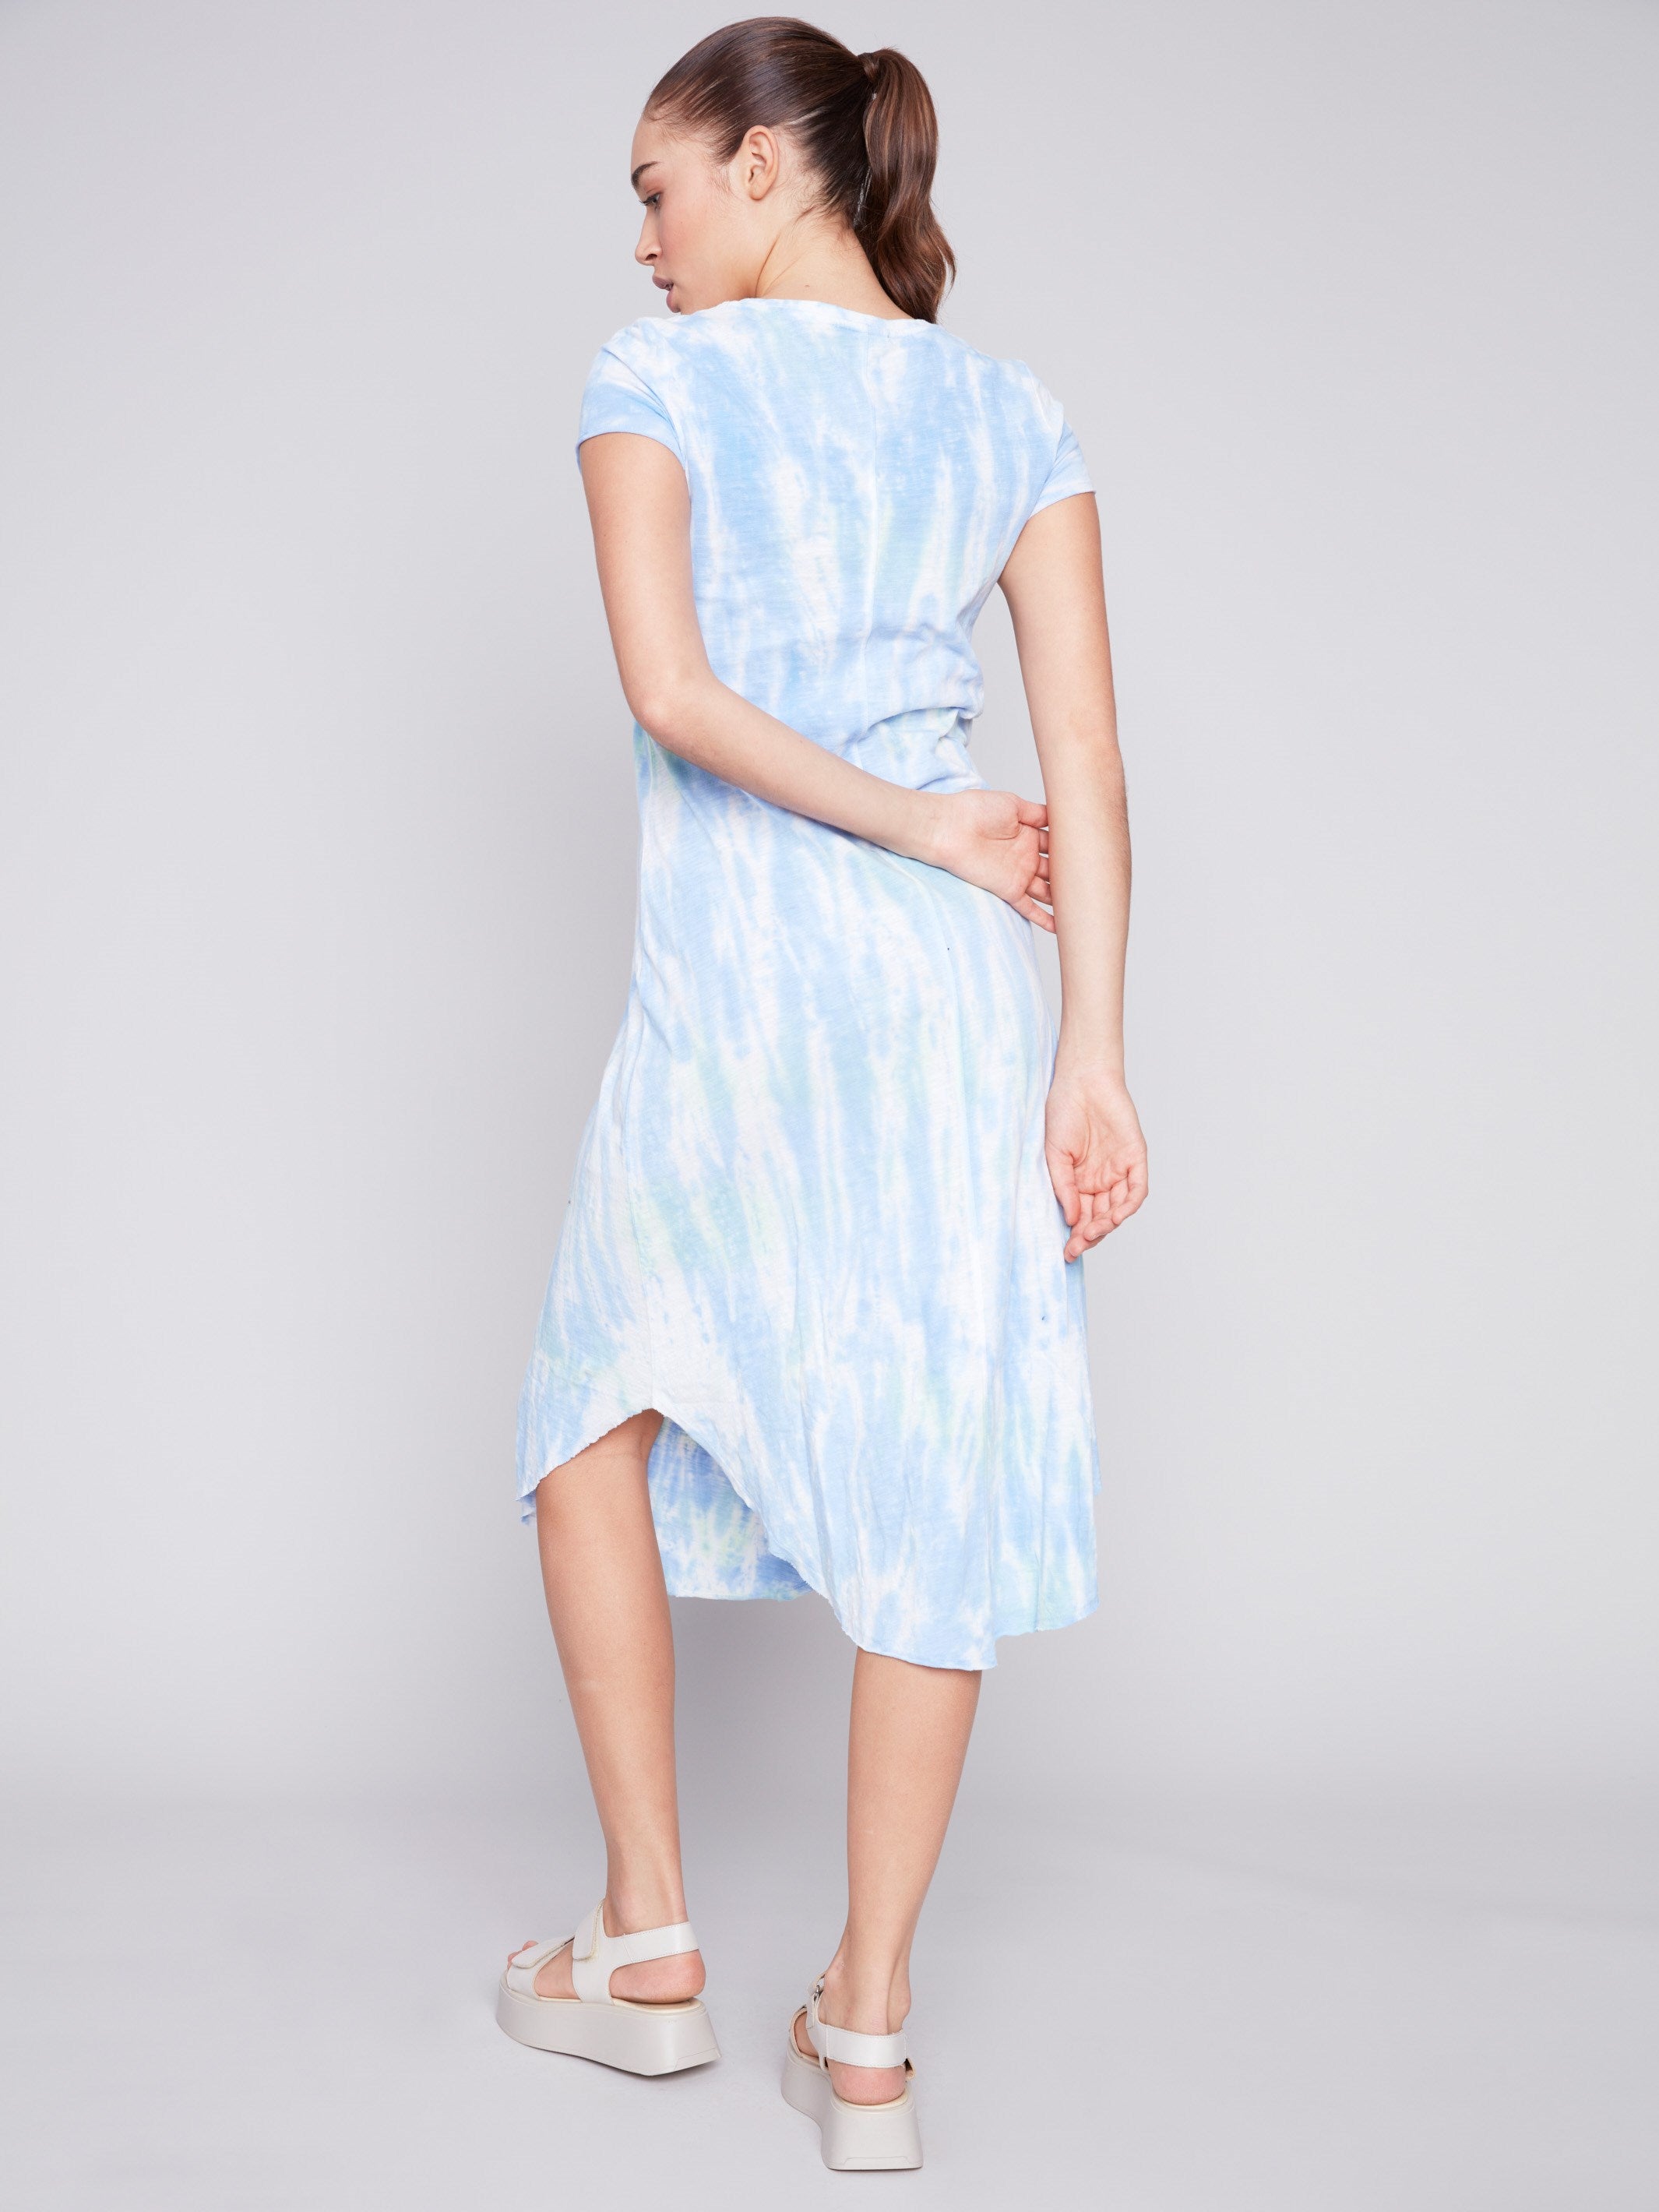 Tie-Dye Cotton Slub Dress - Amazon - Charlie B Collection Canada - Image 2